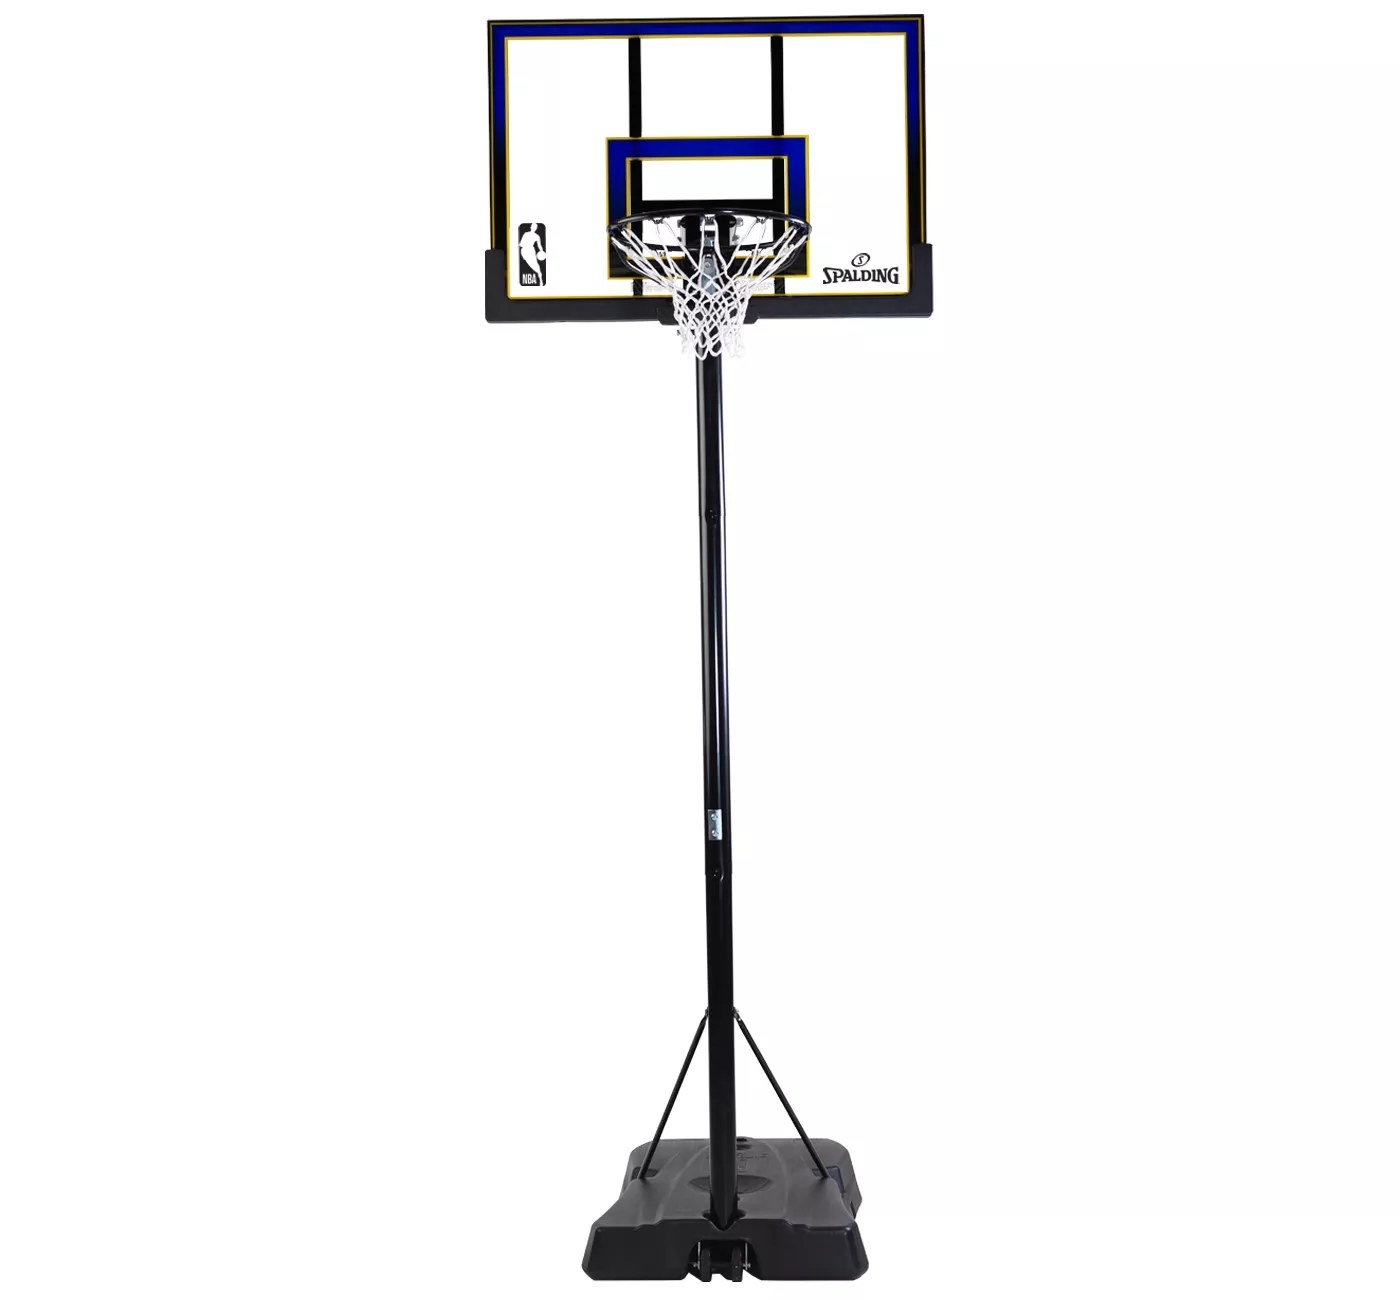 The NBA Spalding backboard